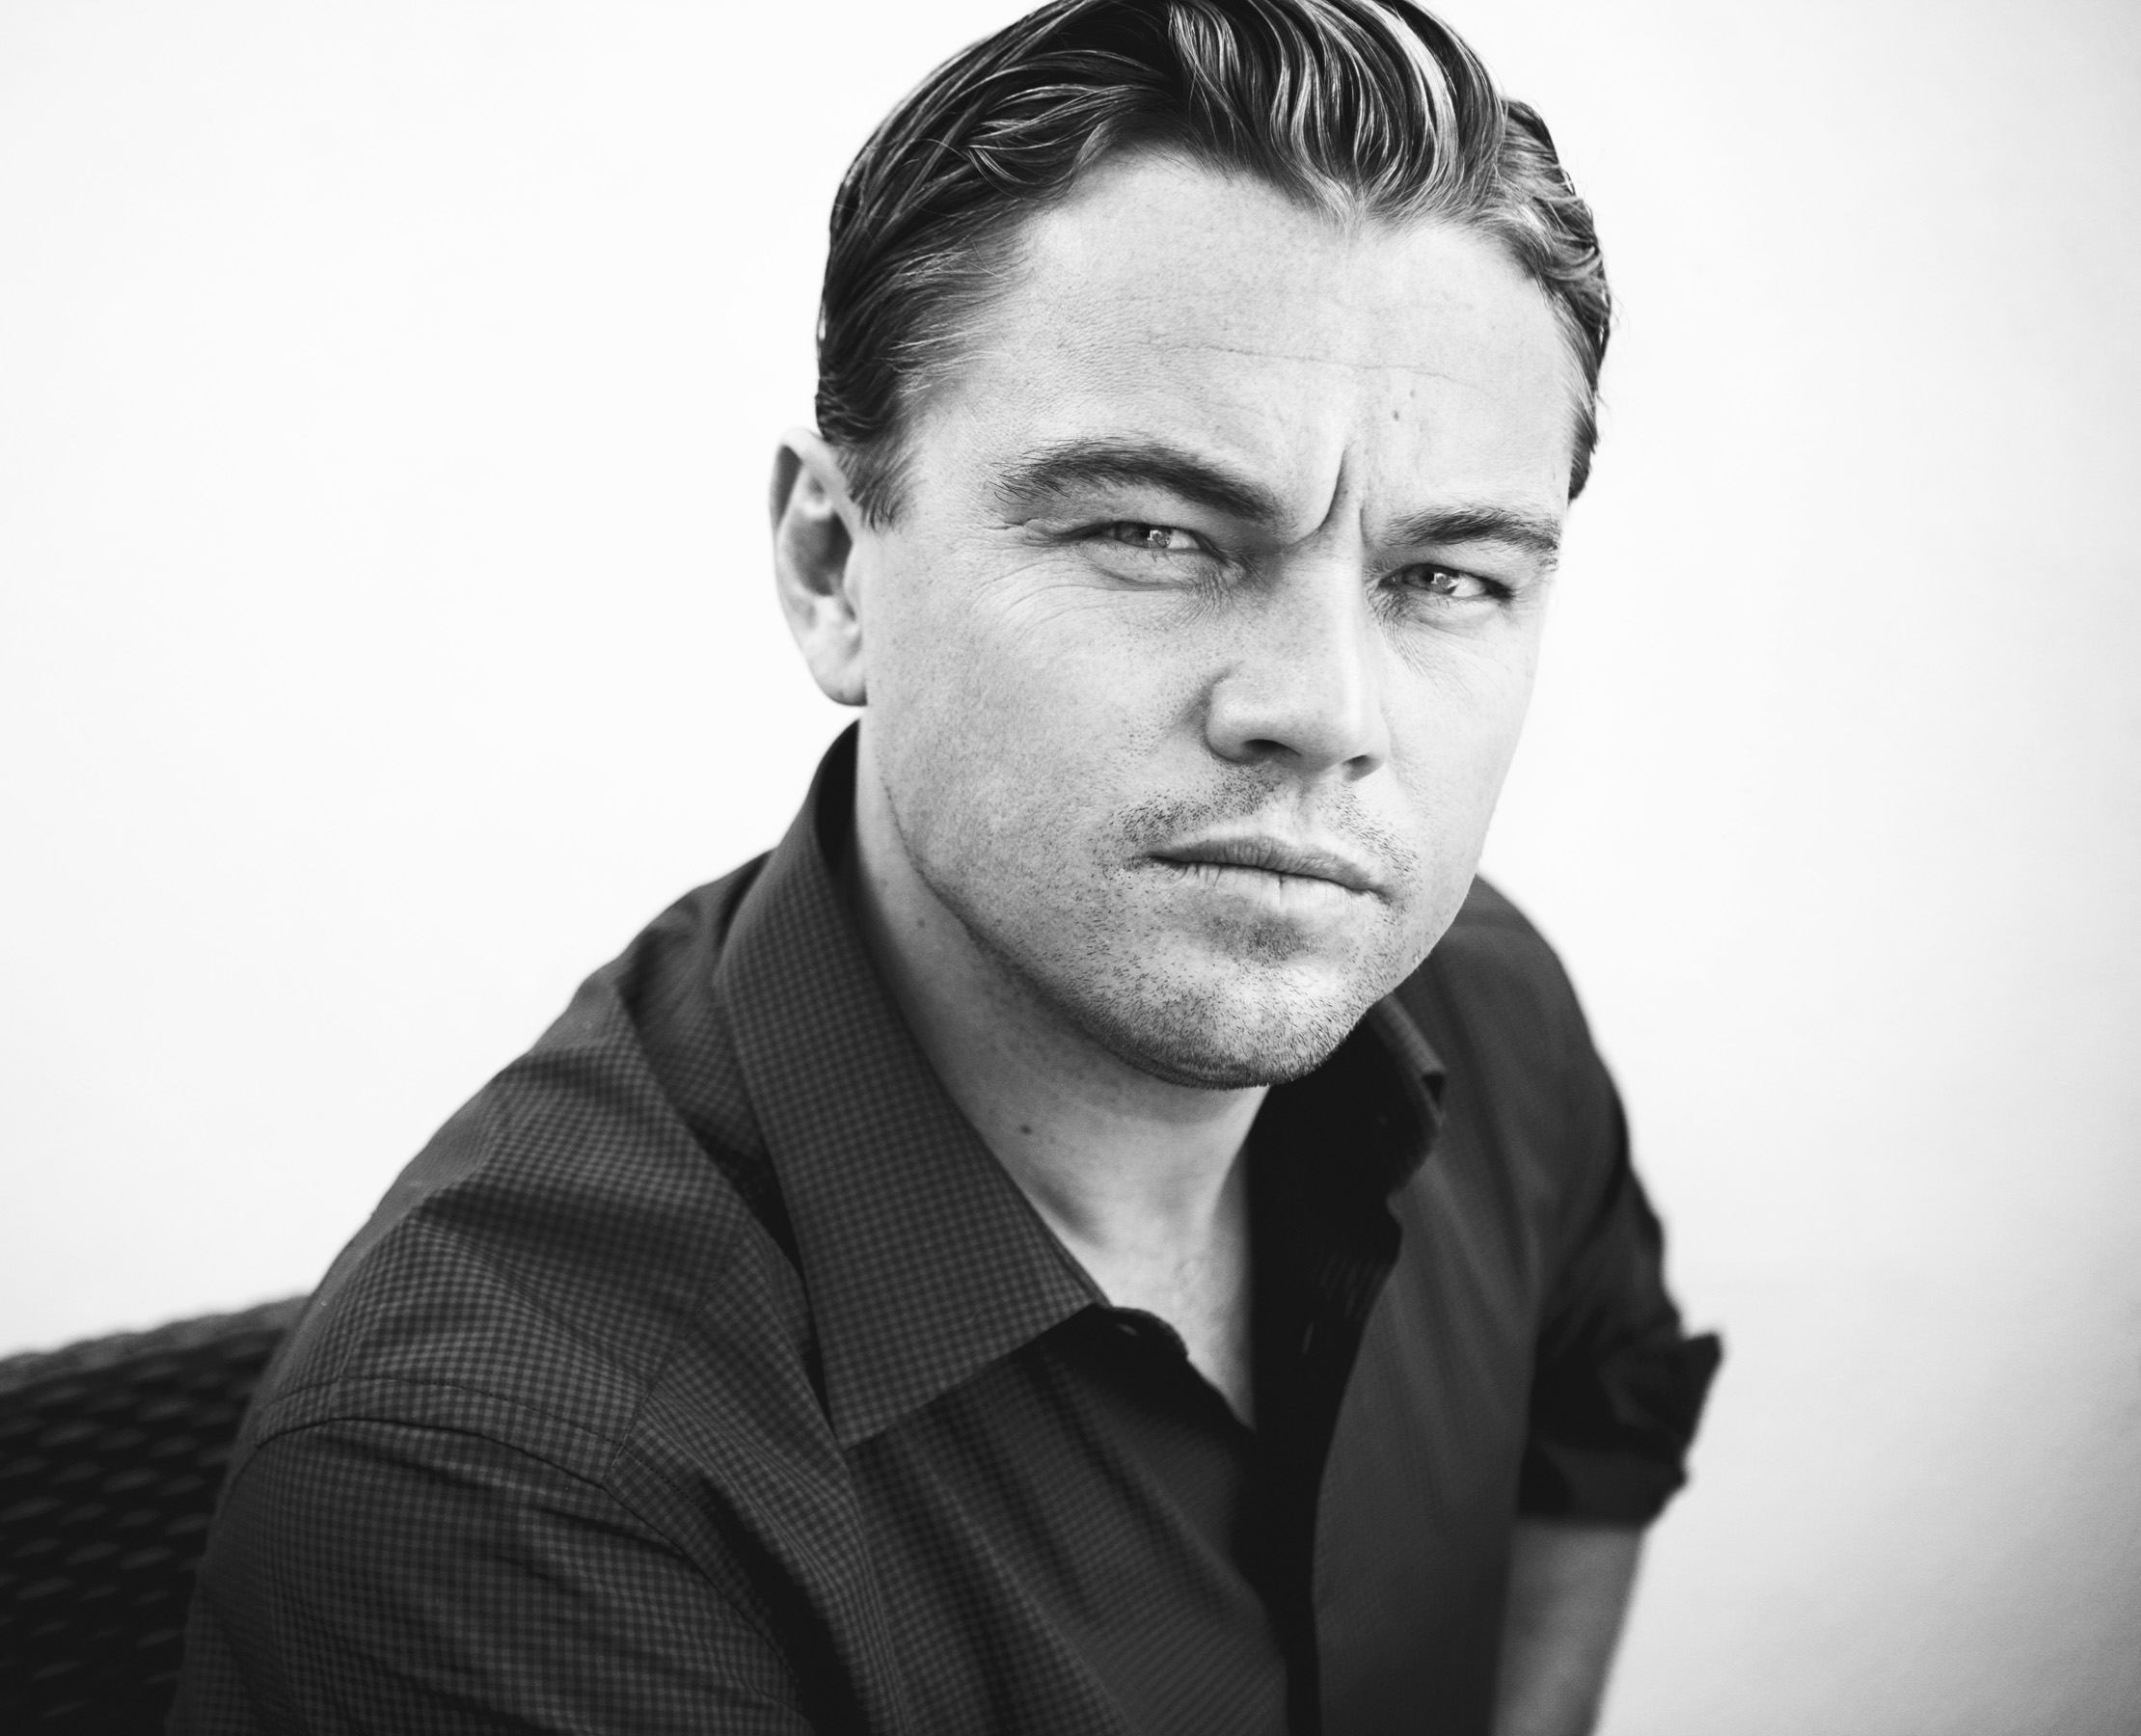 LeonardoDiCaprio_1653b